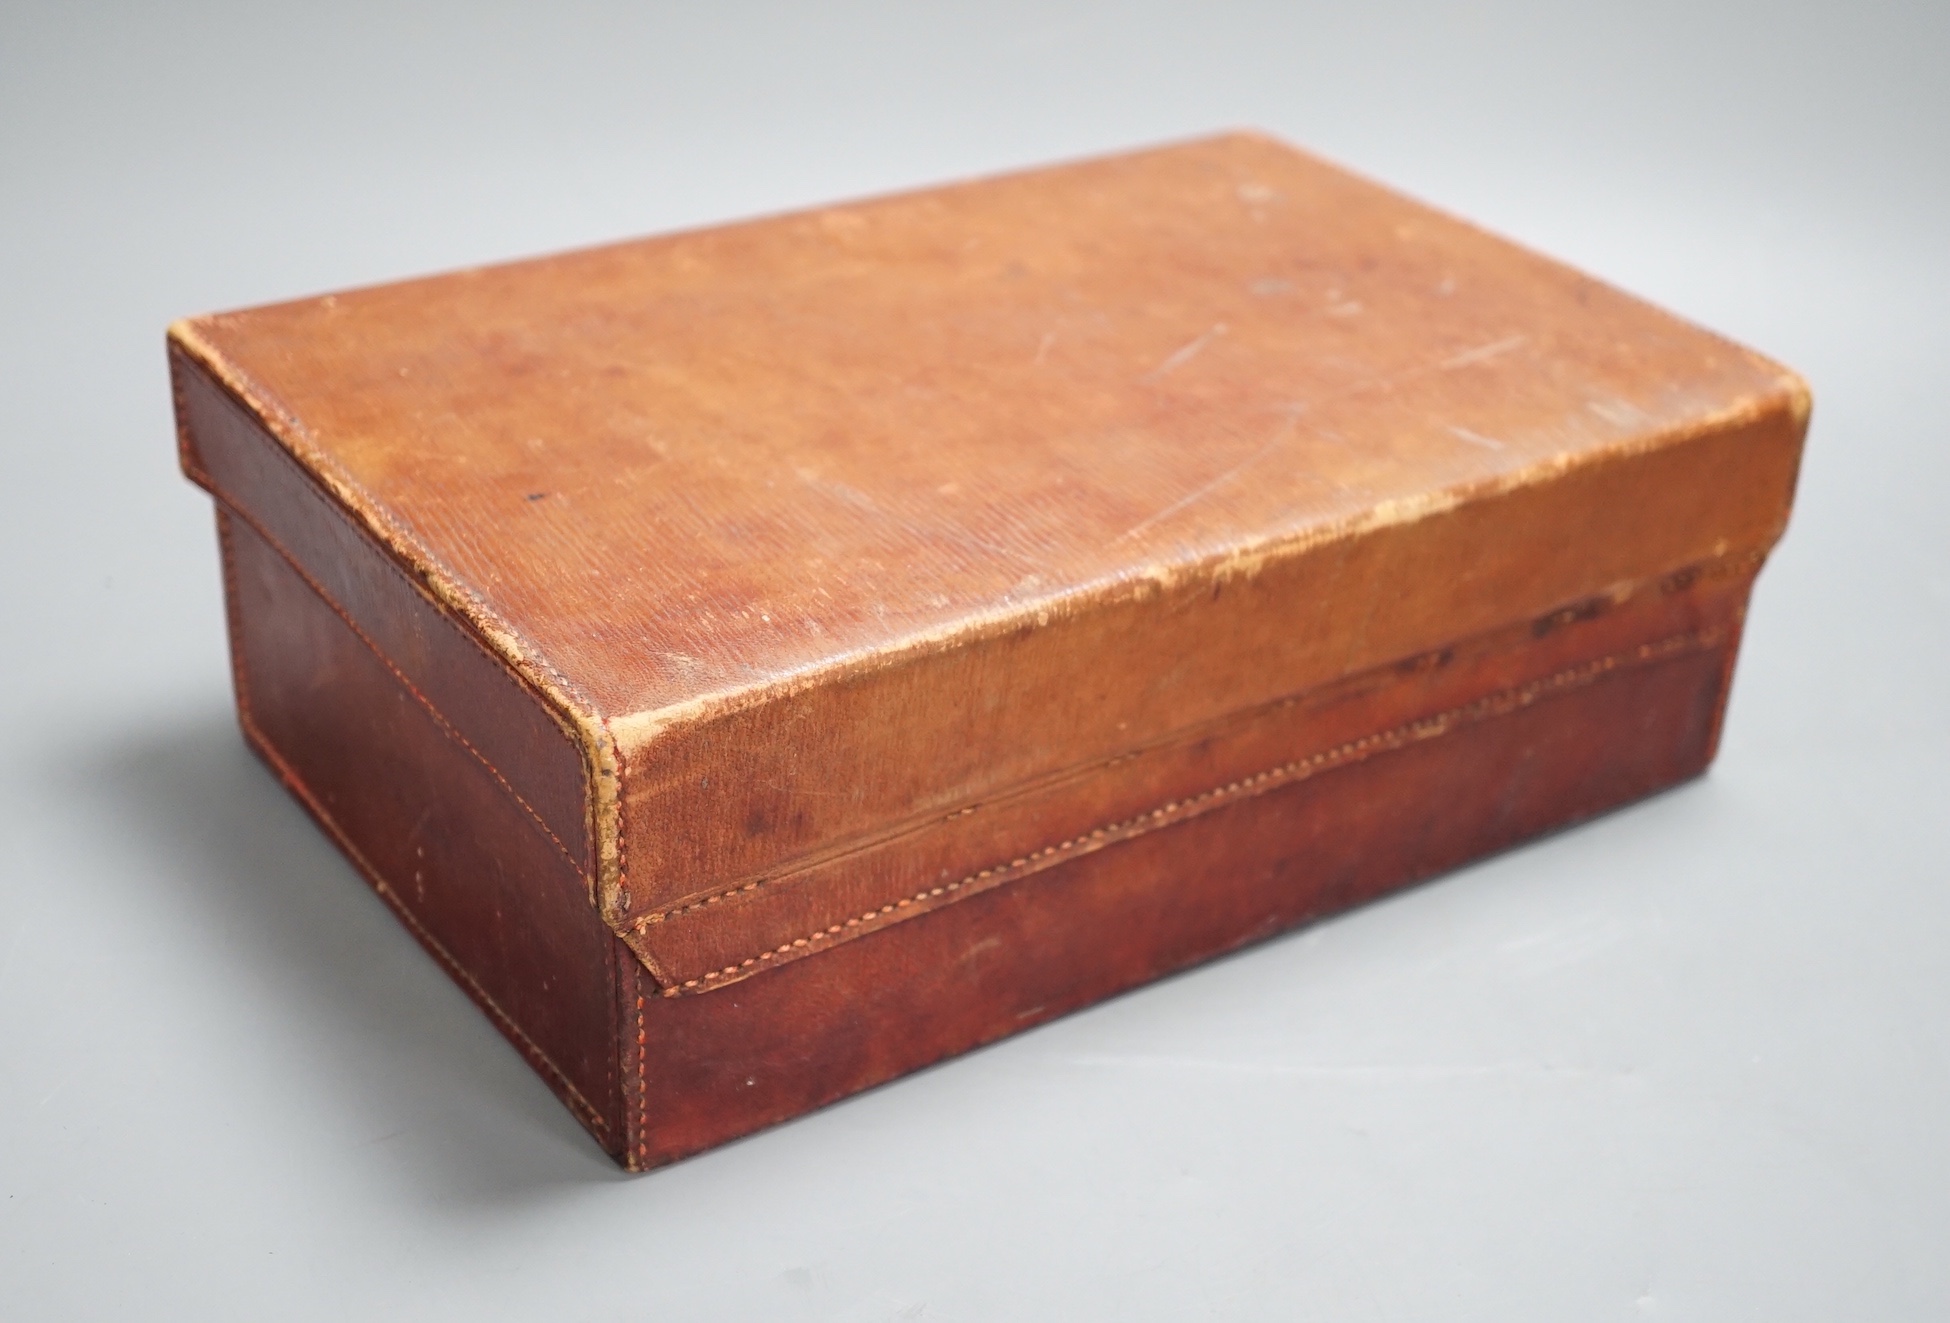 A Vintage Asprey red leather case, 28cm